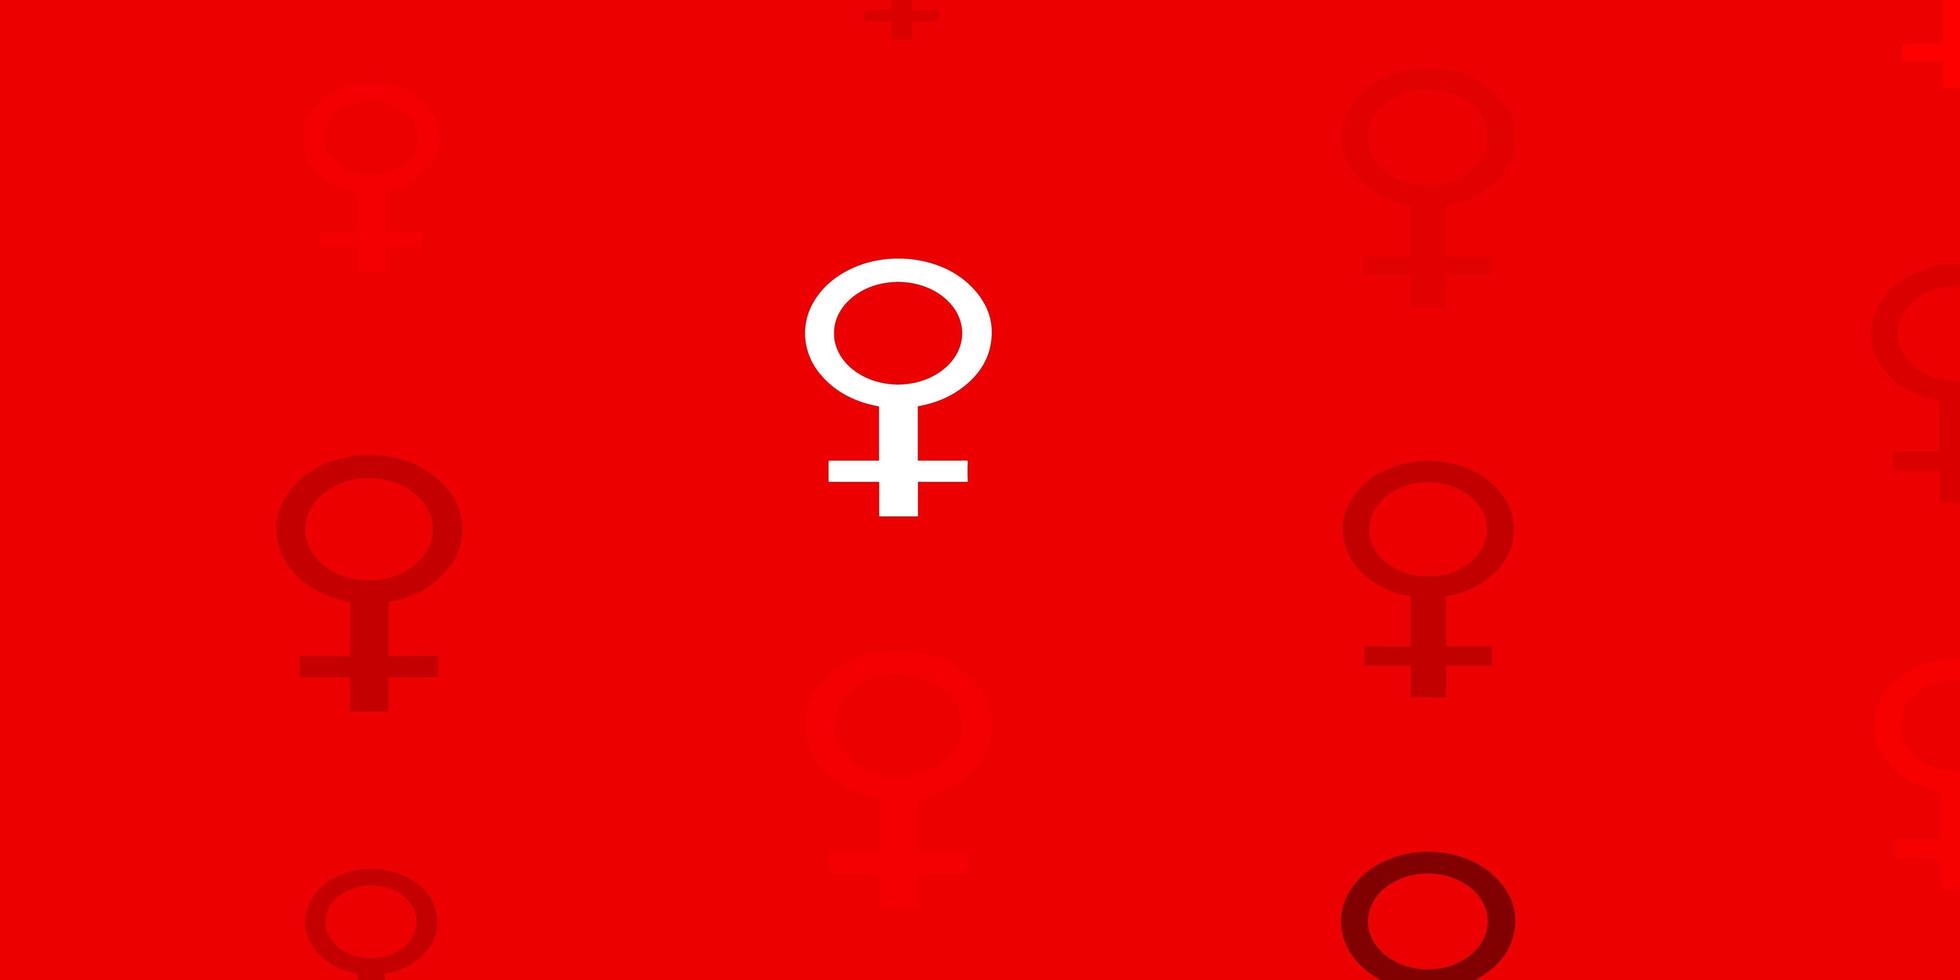 patrón de vector rojo claro con elementos de feminismo.